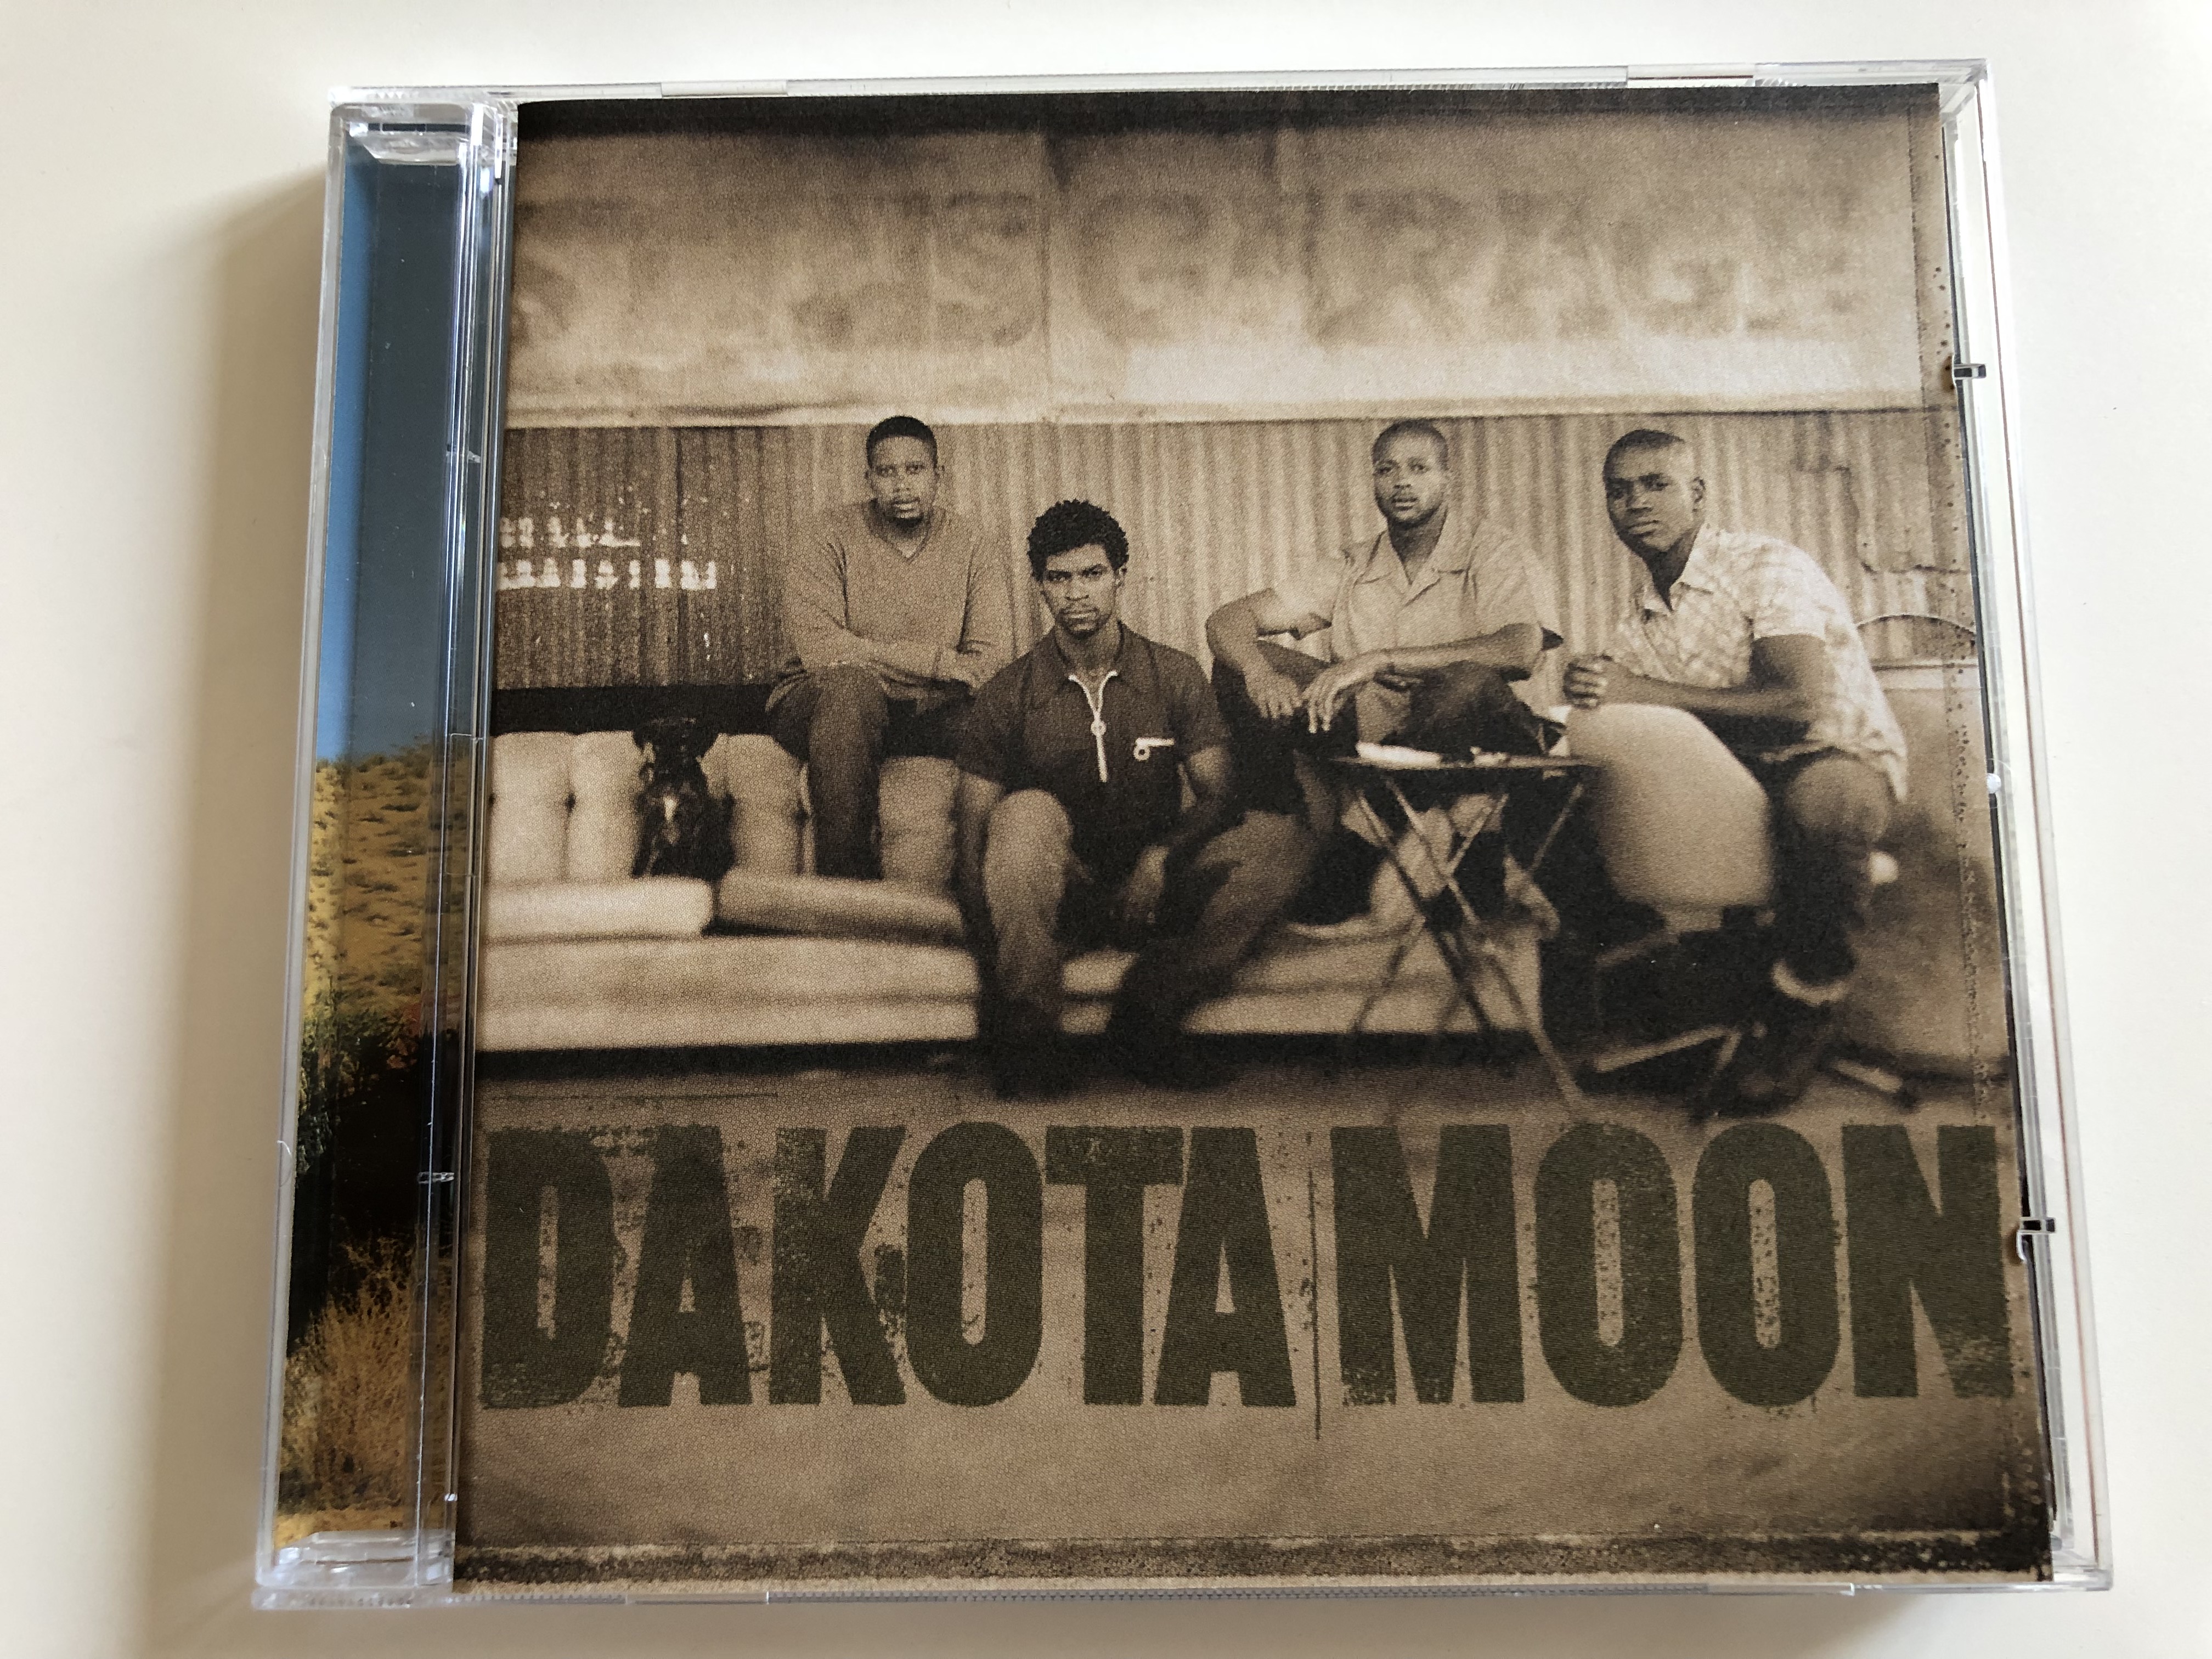 dakota-moon-elektra-audio-cd-1998-7559-62163-2-1-.jpg